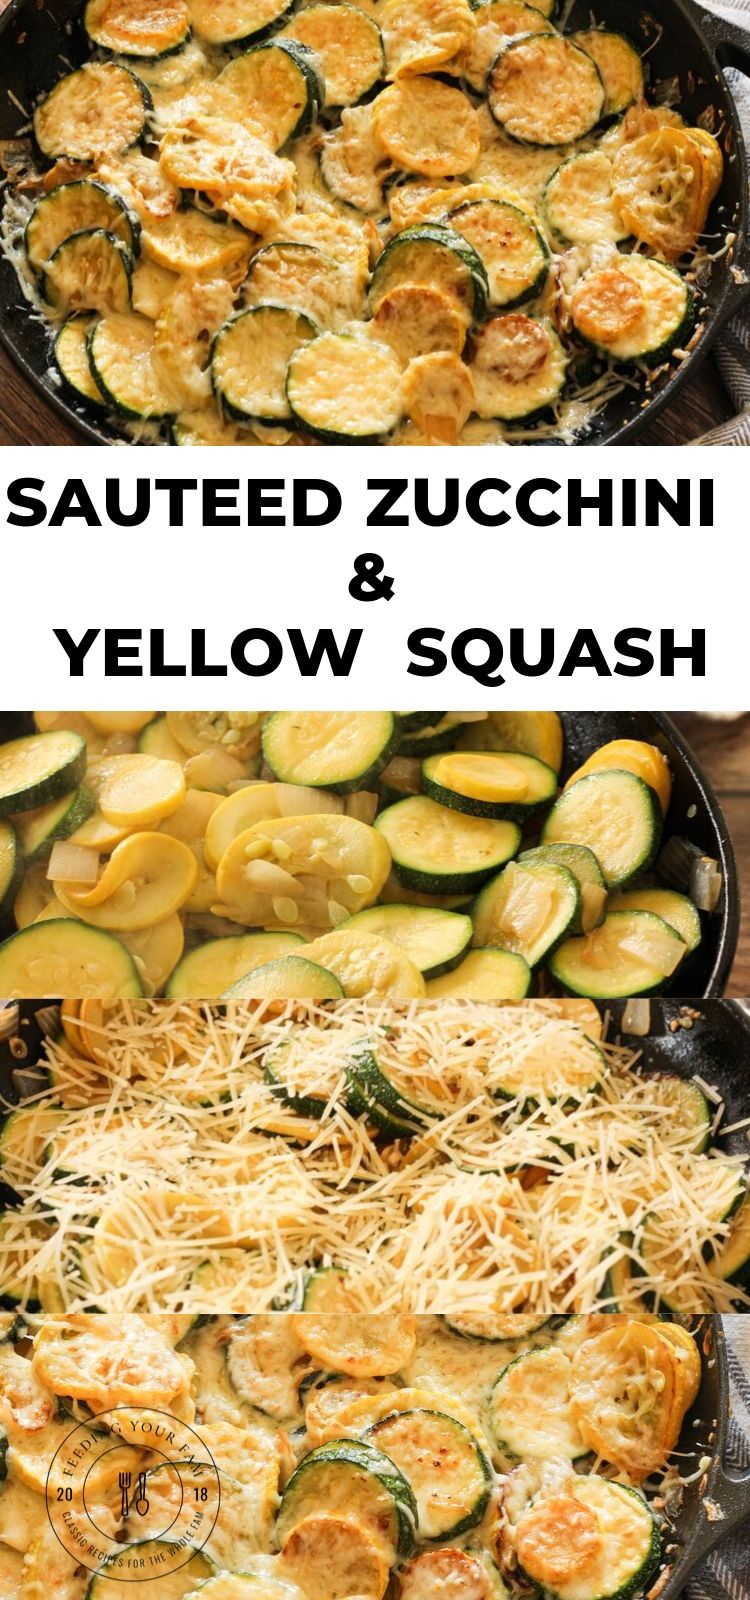 sauteed zucchini and yellow squash pinterest image